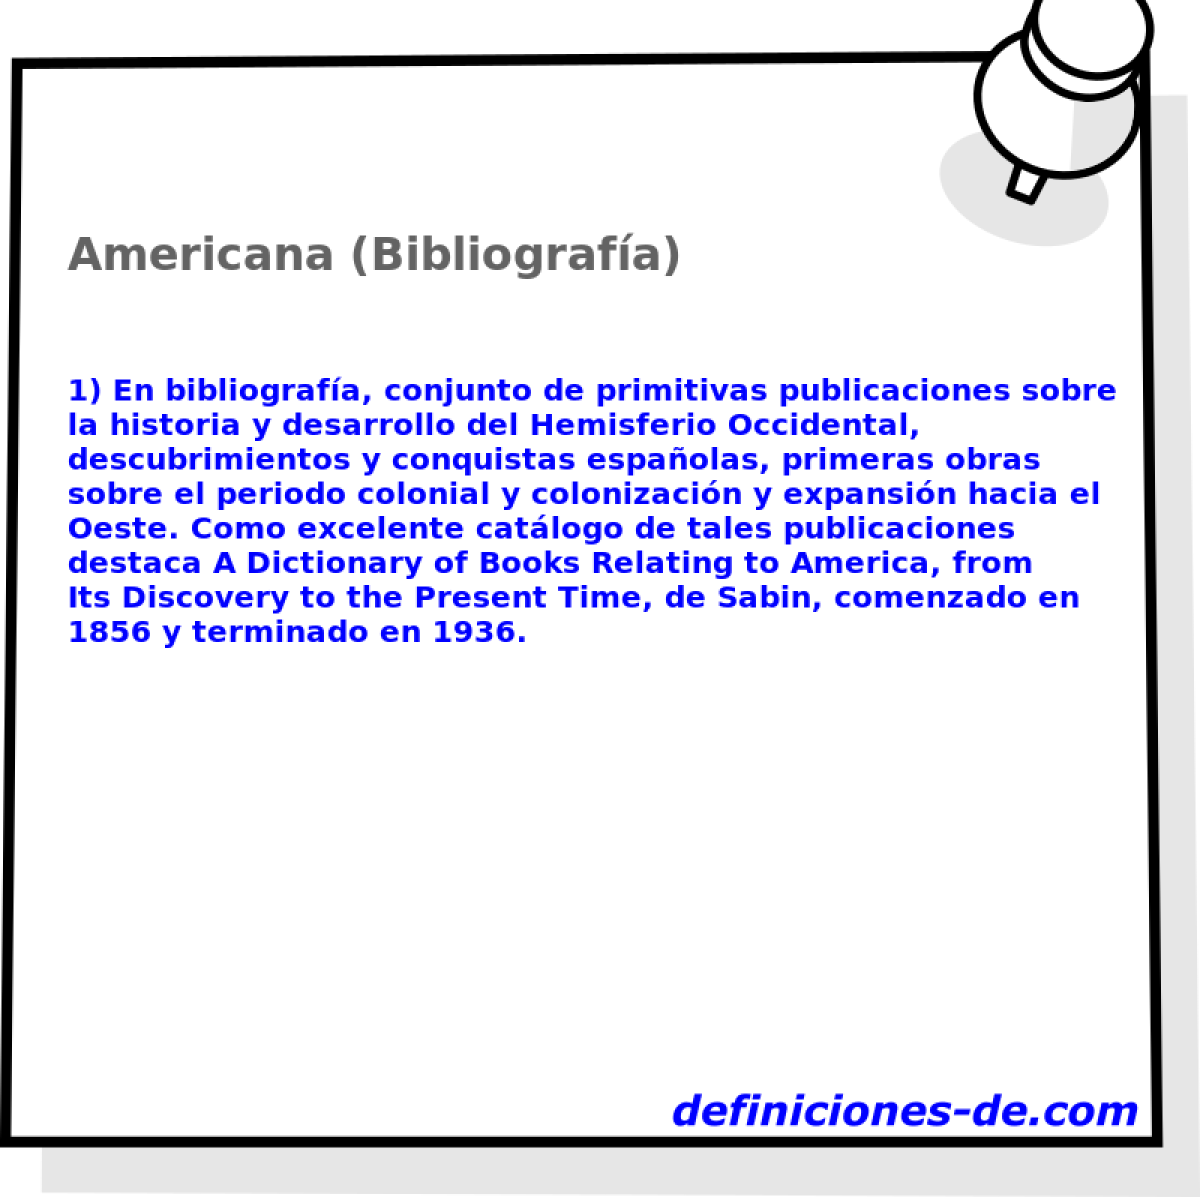 Americana (Bibliografa) 